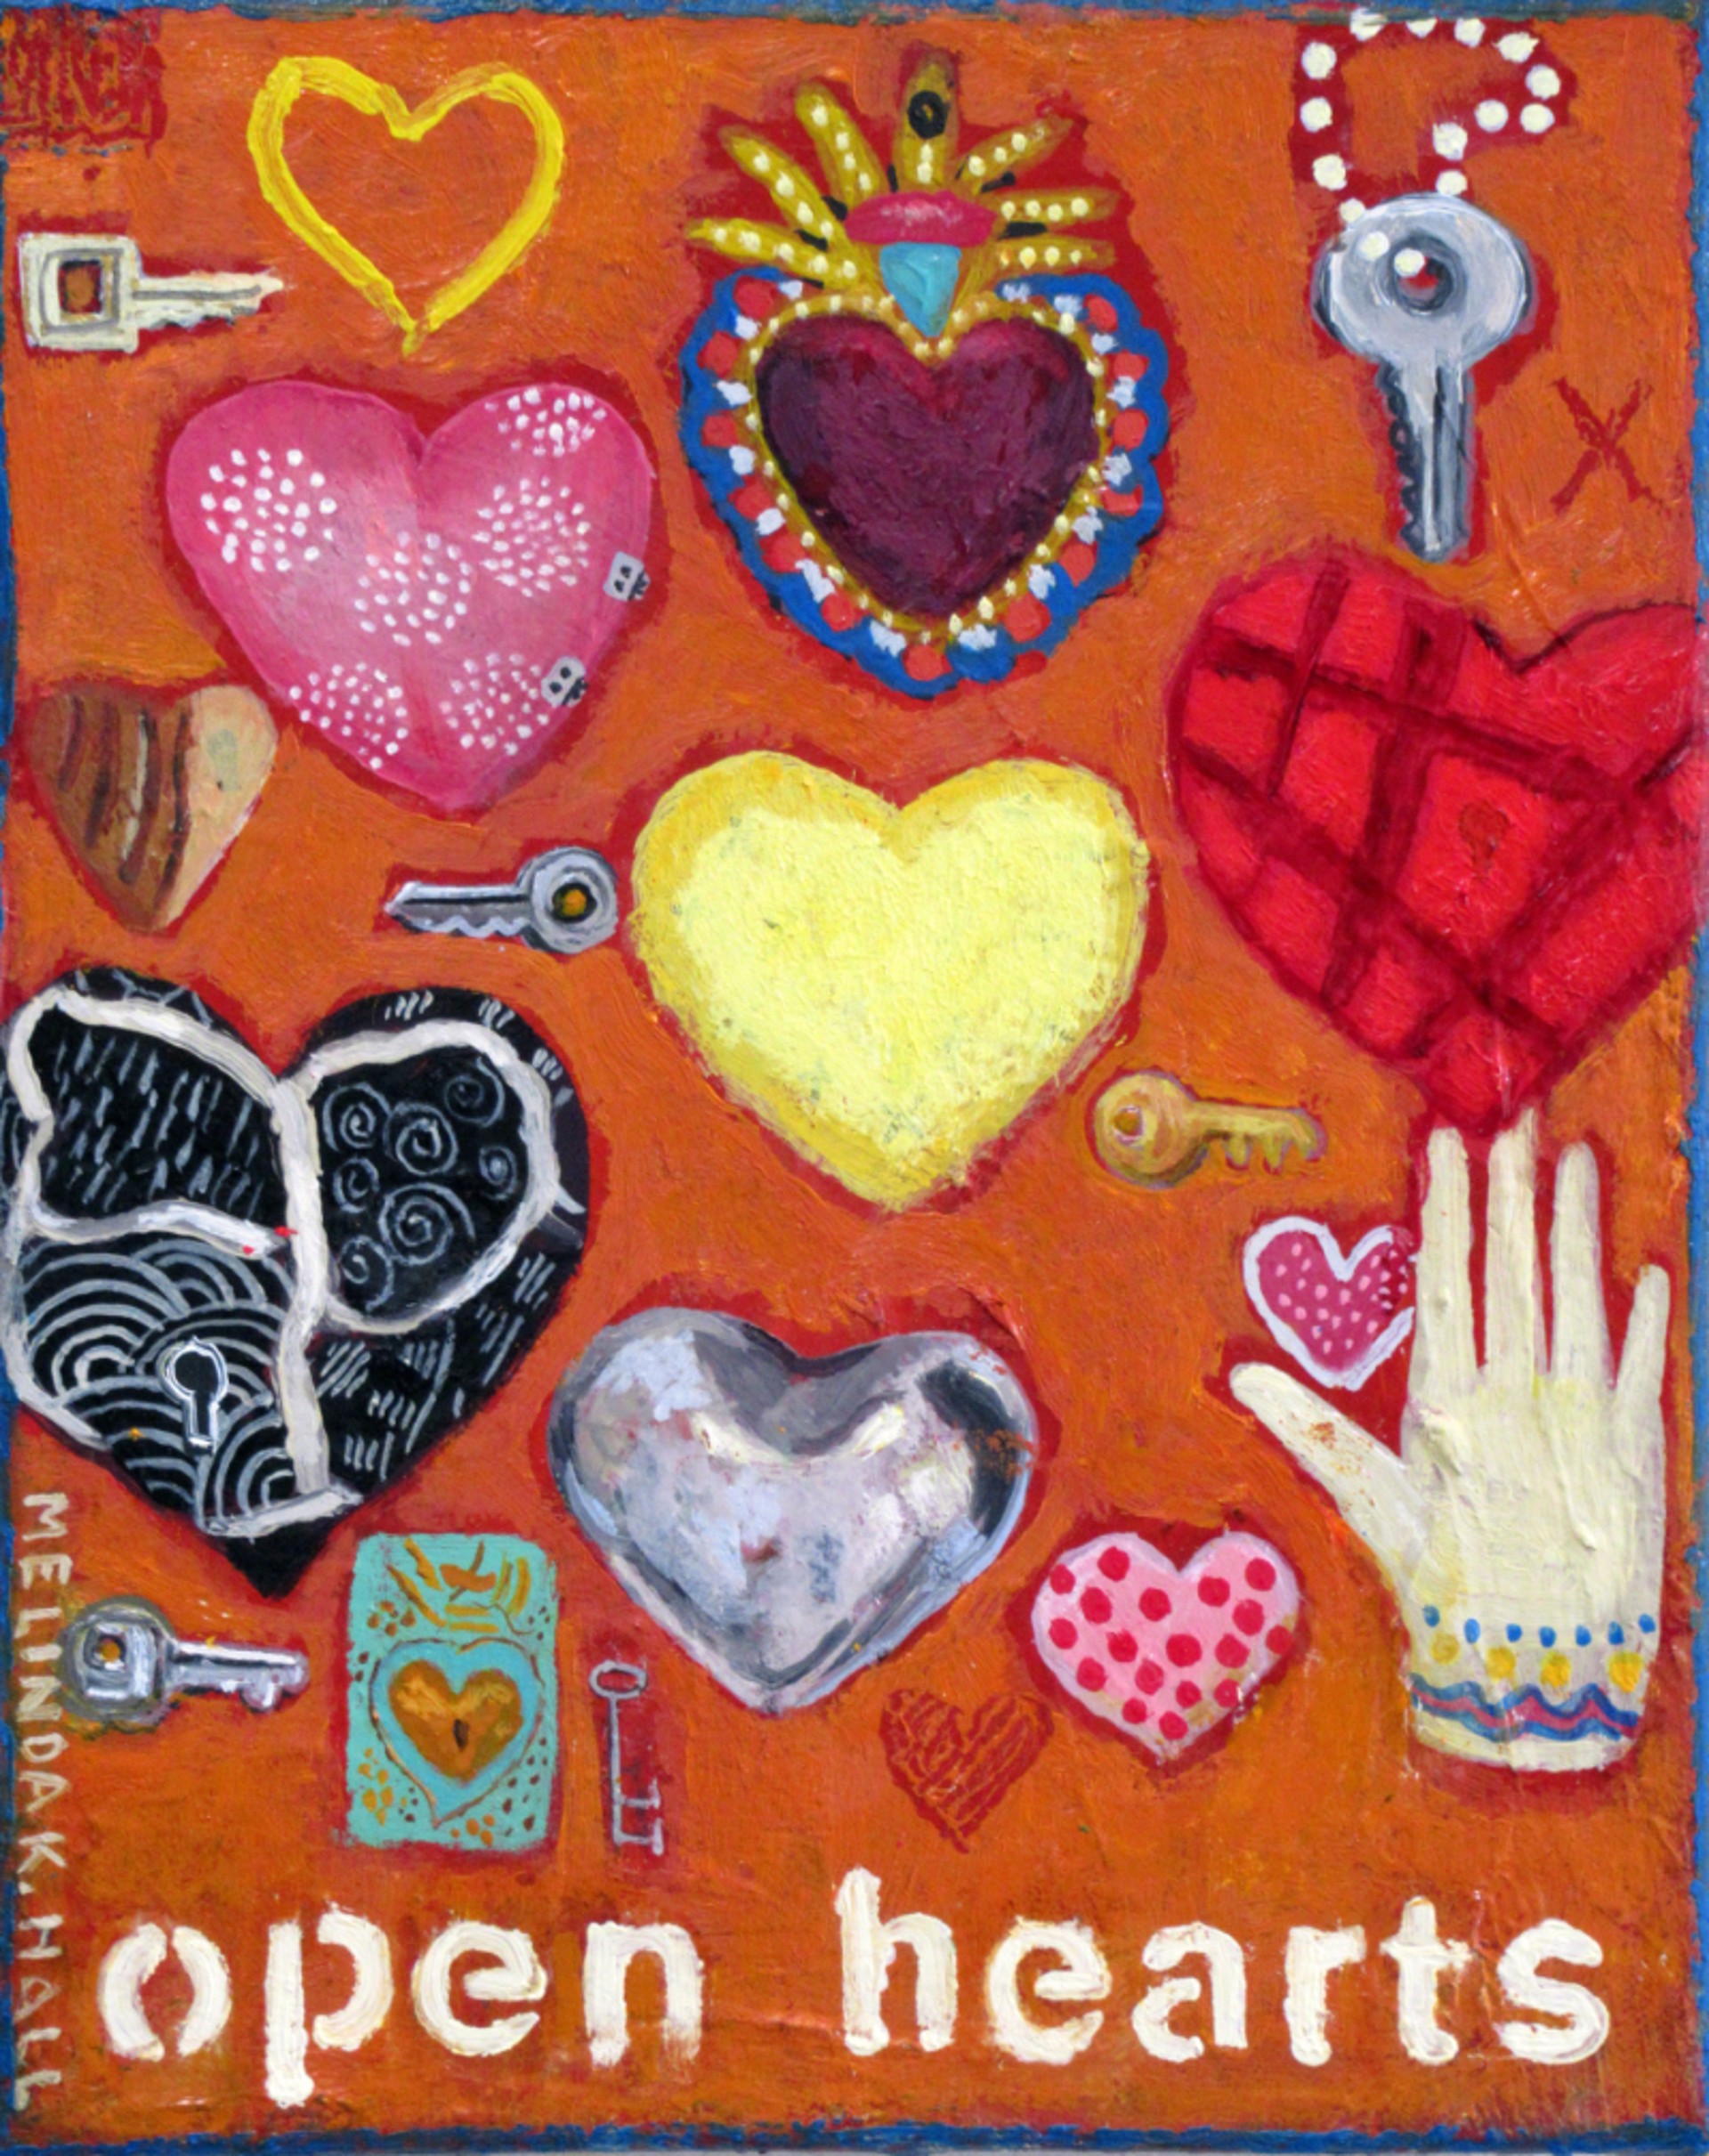 Open Hearts by Melinda K. Hall